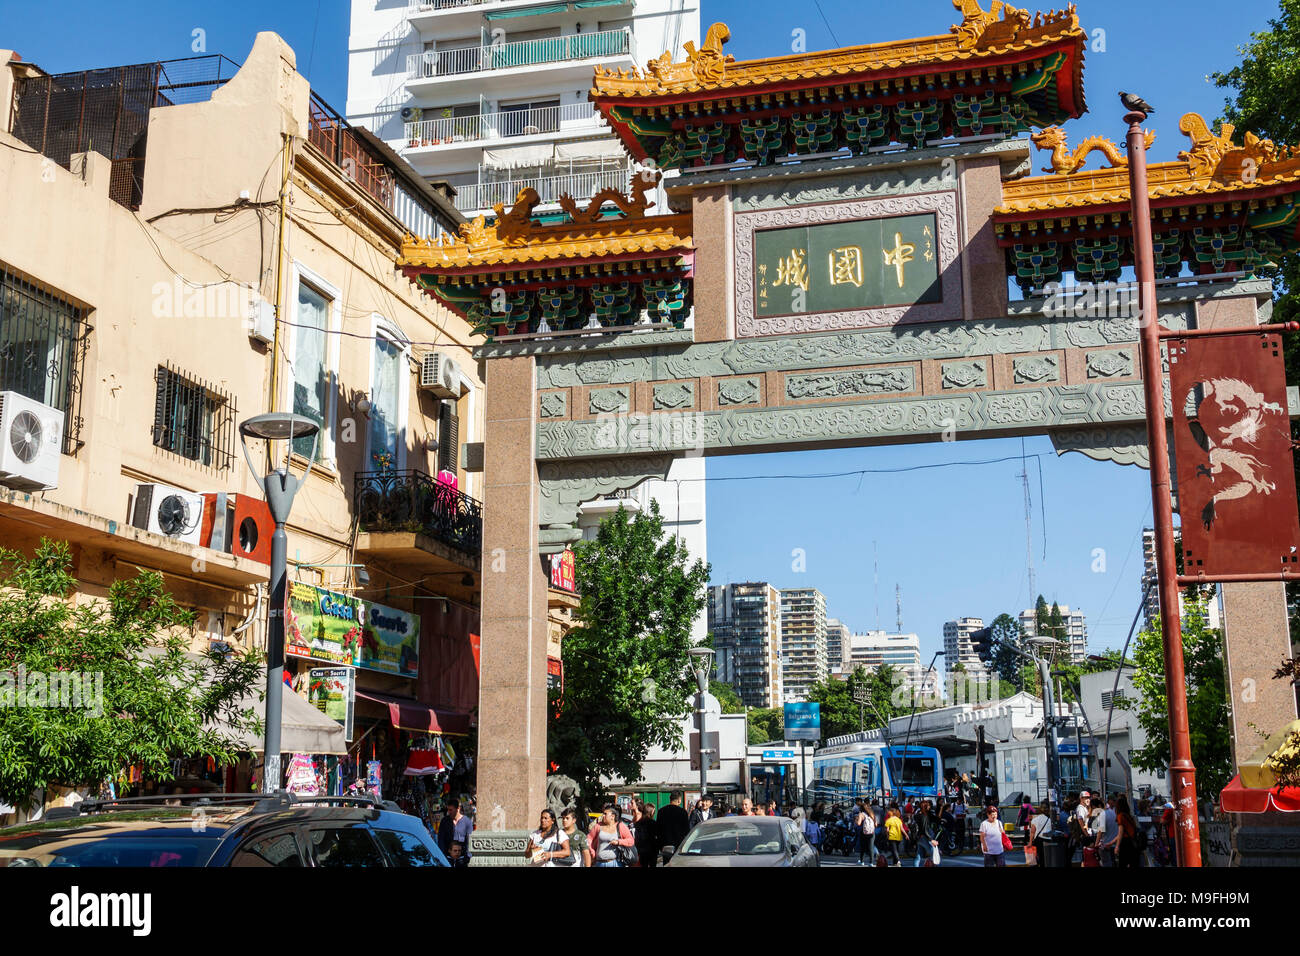 Buenos Aires Argentina,Belgrano,China Town Barrio Chino Chinatown neighborhood,Paifang,gate,Chinese architectural arch,Hispanic,ARG171128350 Stock Photo